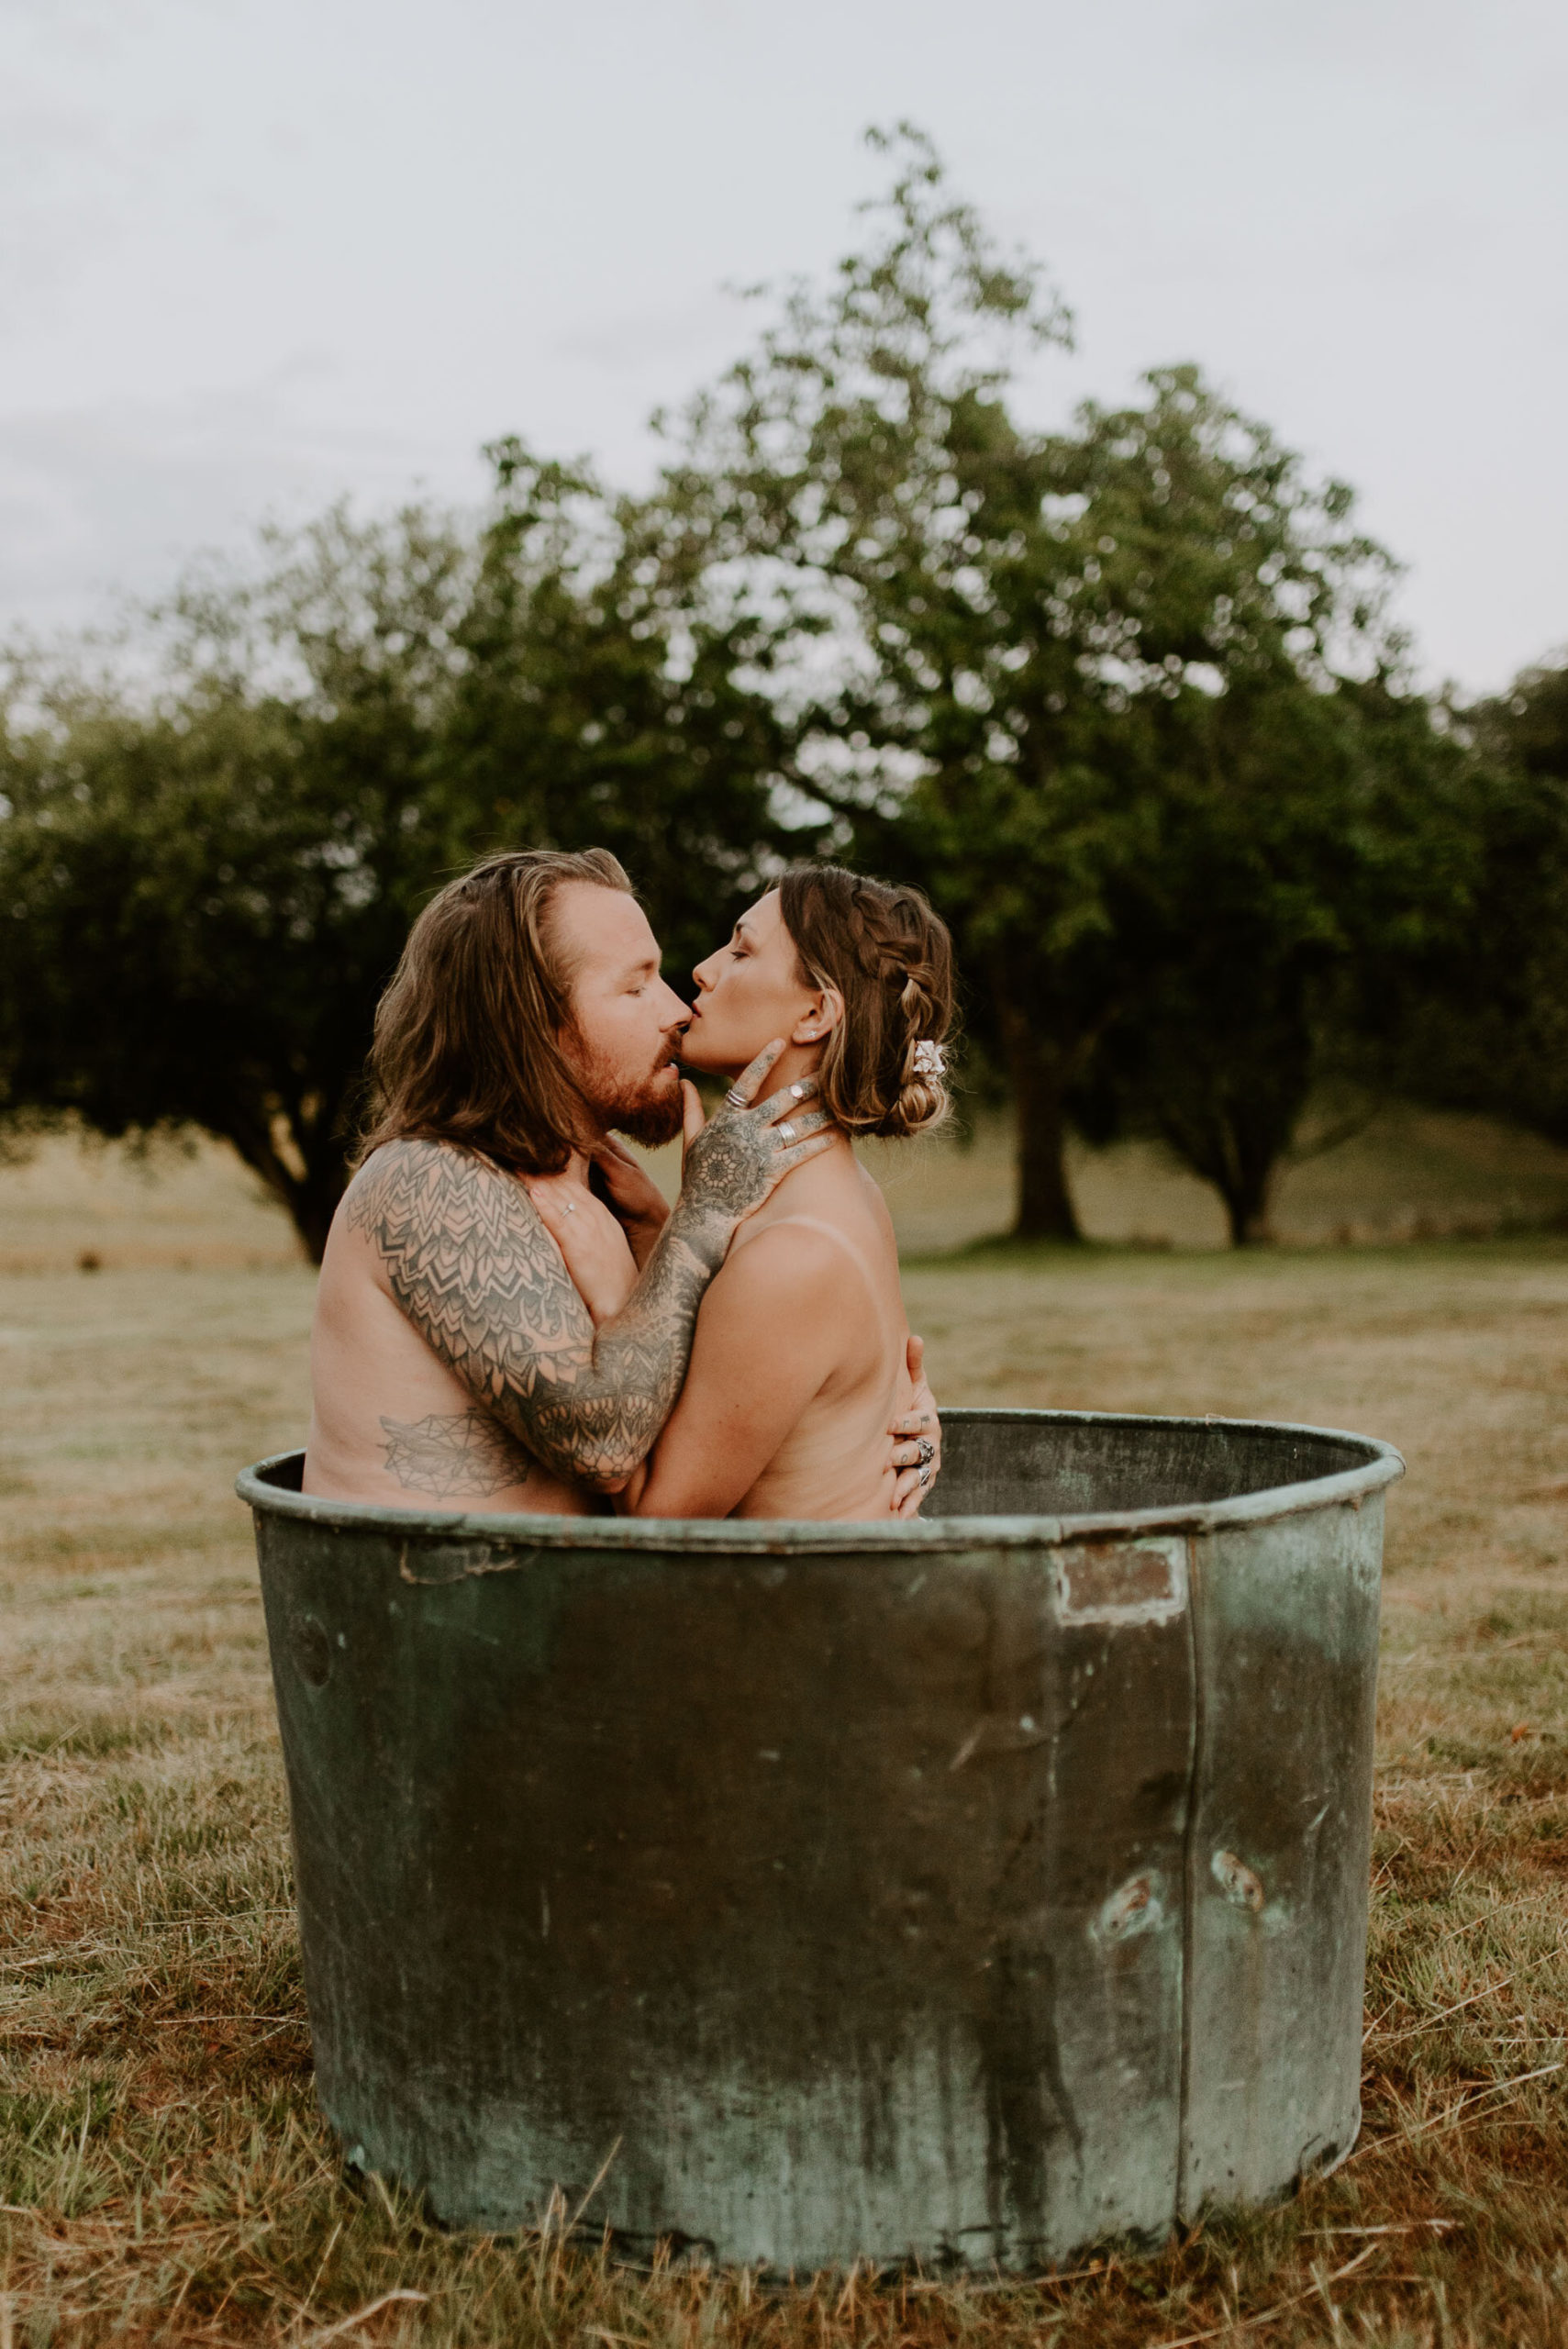 Romantic Boho Wedding Shoot - 25 July - Laura Williams Photography - LR-155 - Bury Court Barn.jpg